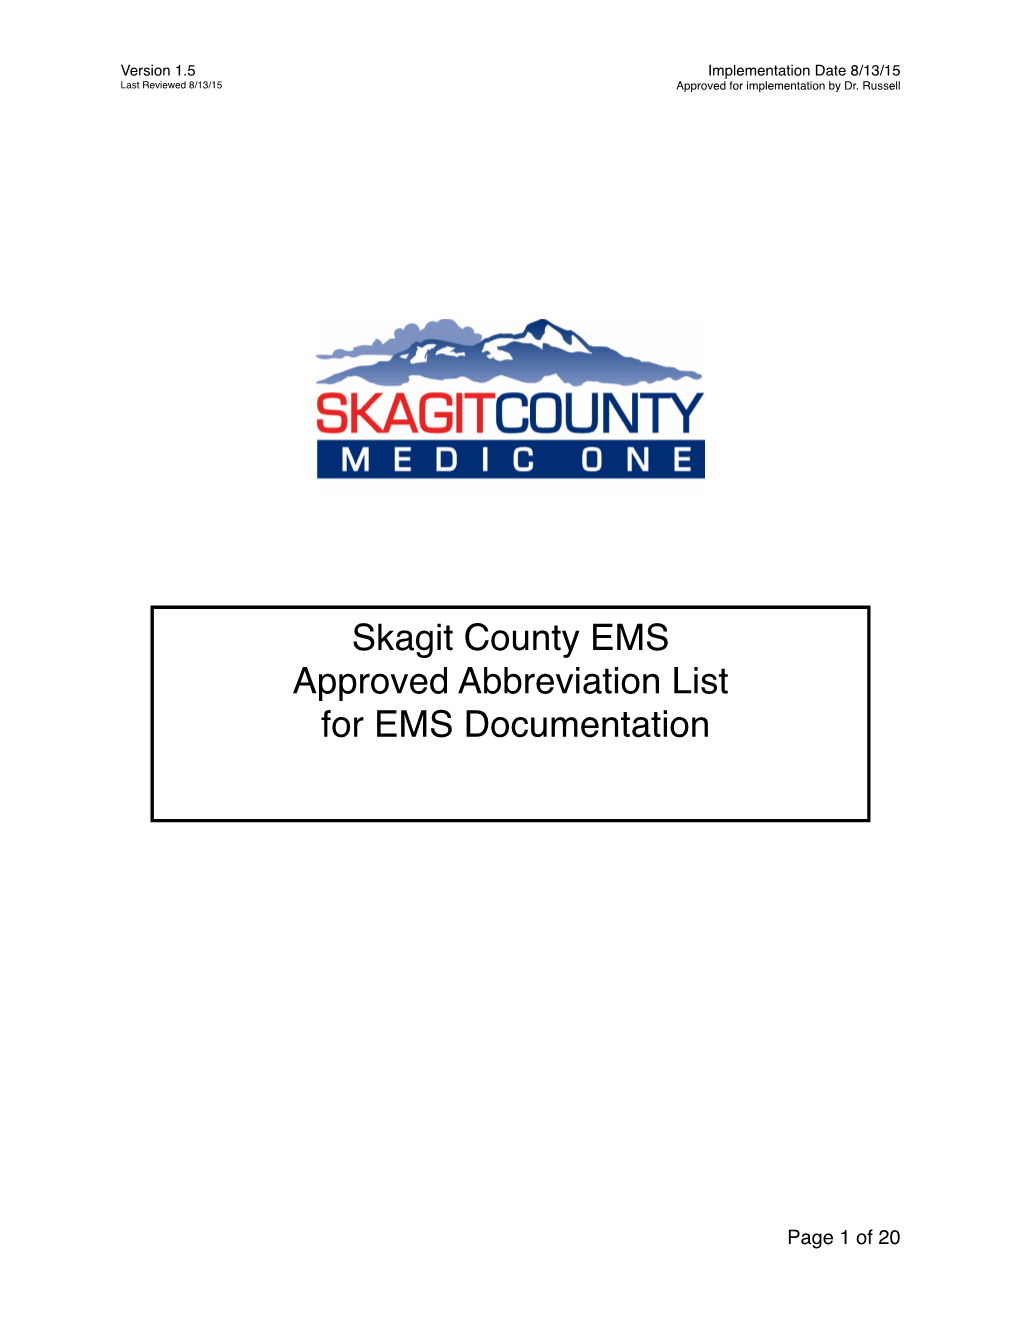 Skagit EMS Abbreviation List V1.5